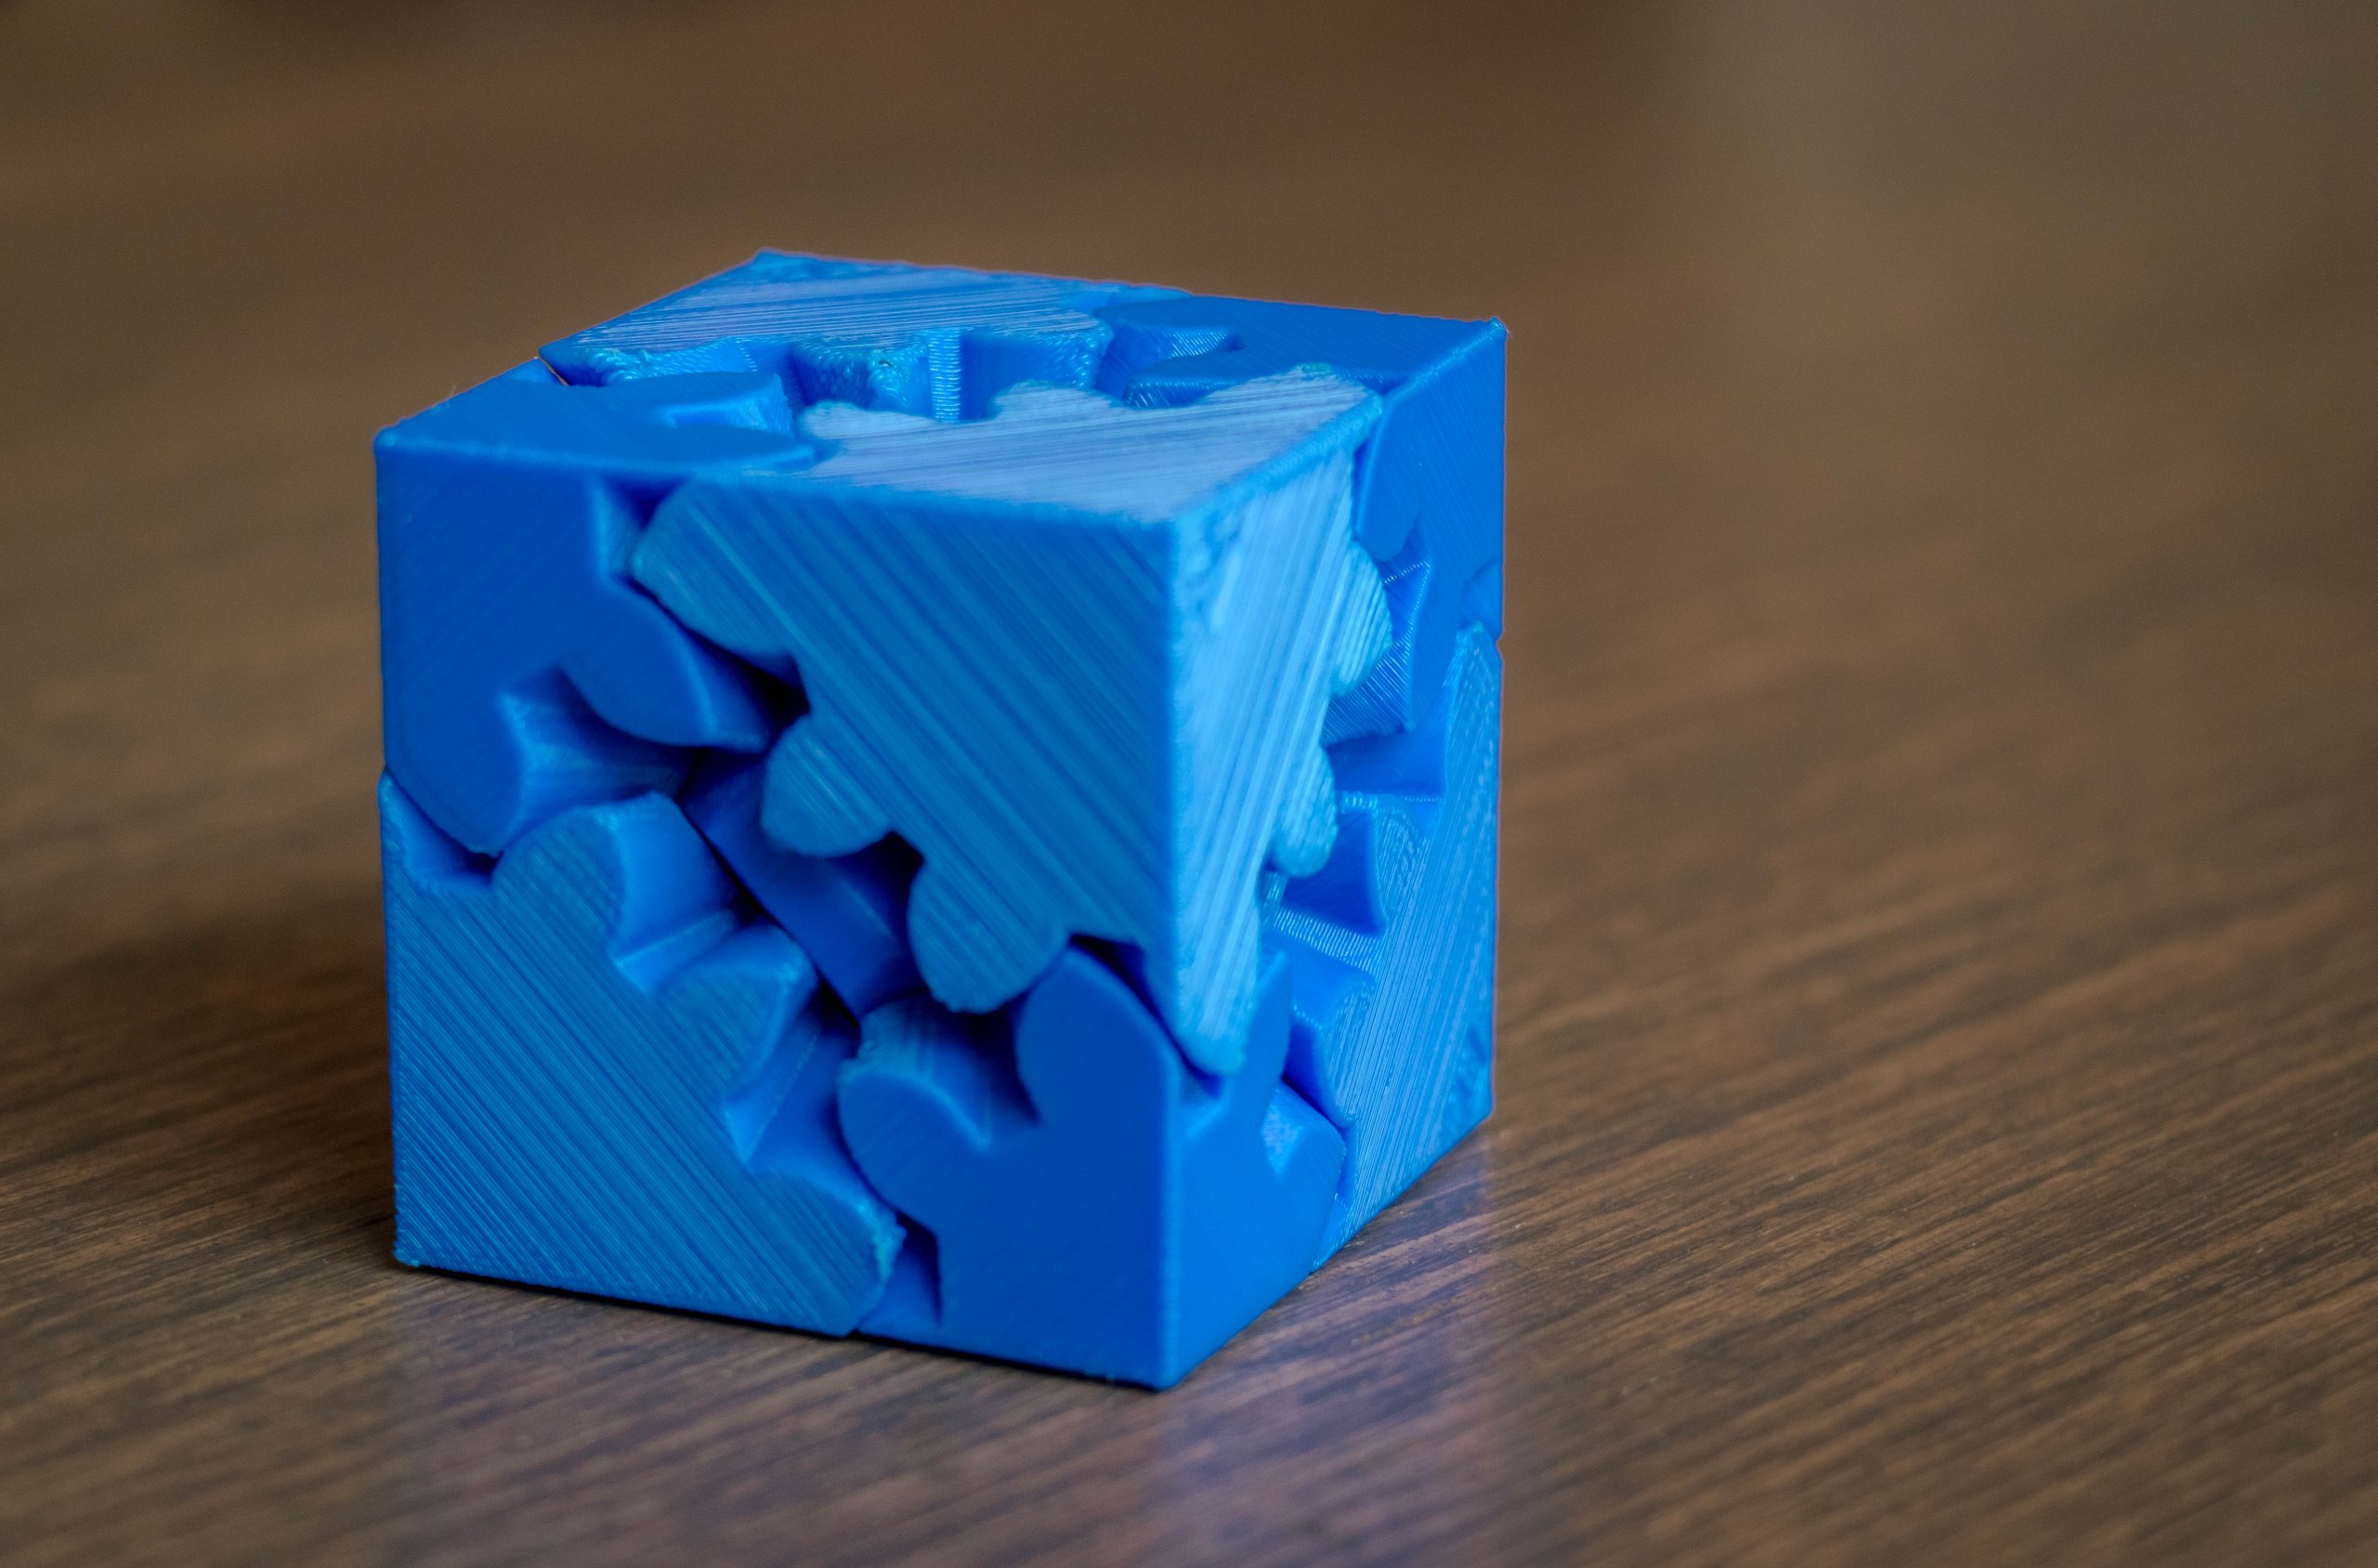 Cube шкатулка. 3d принтер куб. 3d Cube gcode. 3d Printed Cube. Кубик 3d Puzzle Cube.